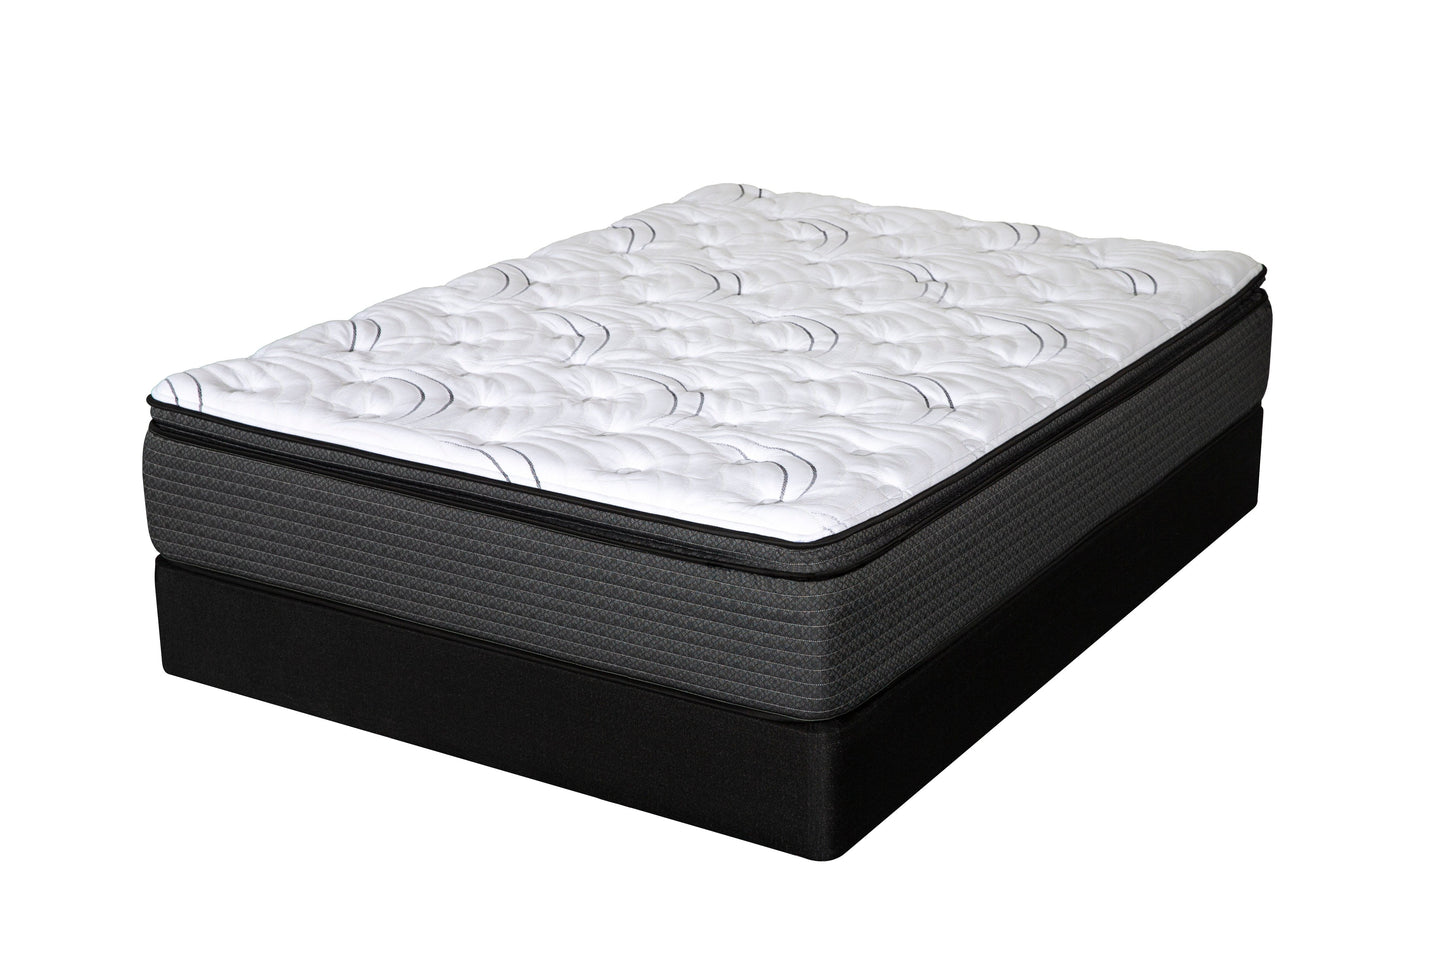 Twin XL Pescara II Luxury Gel Memory Foam Pillow Top by Stress O Pedic.